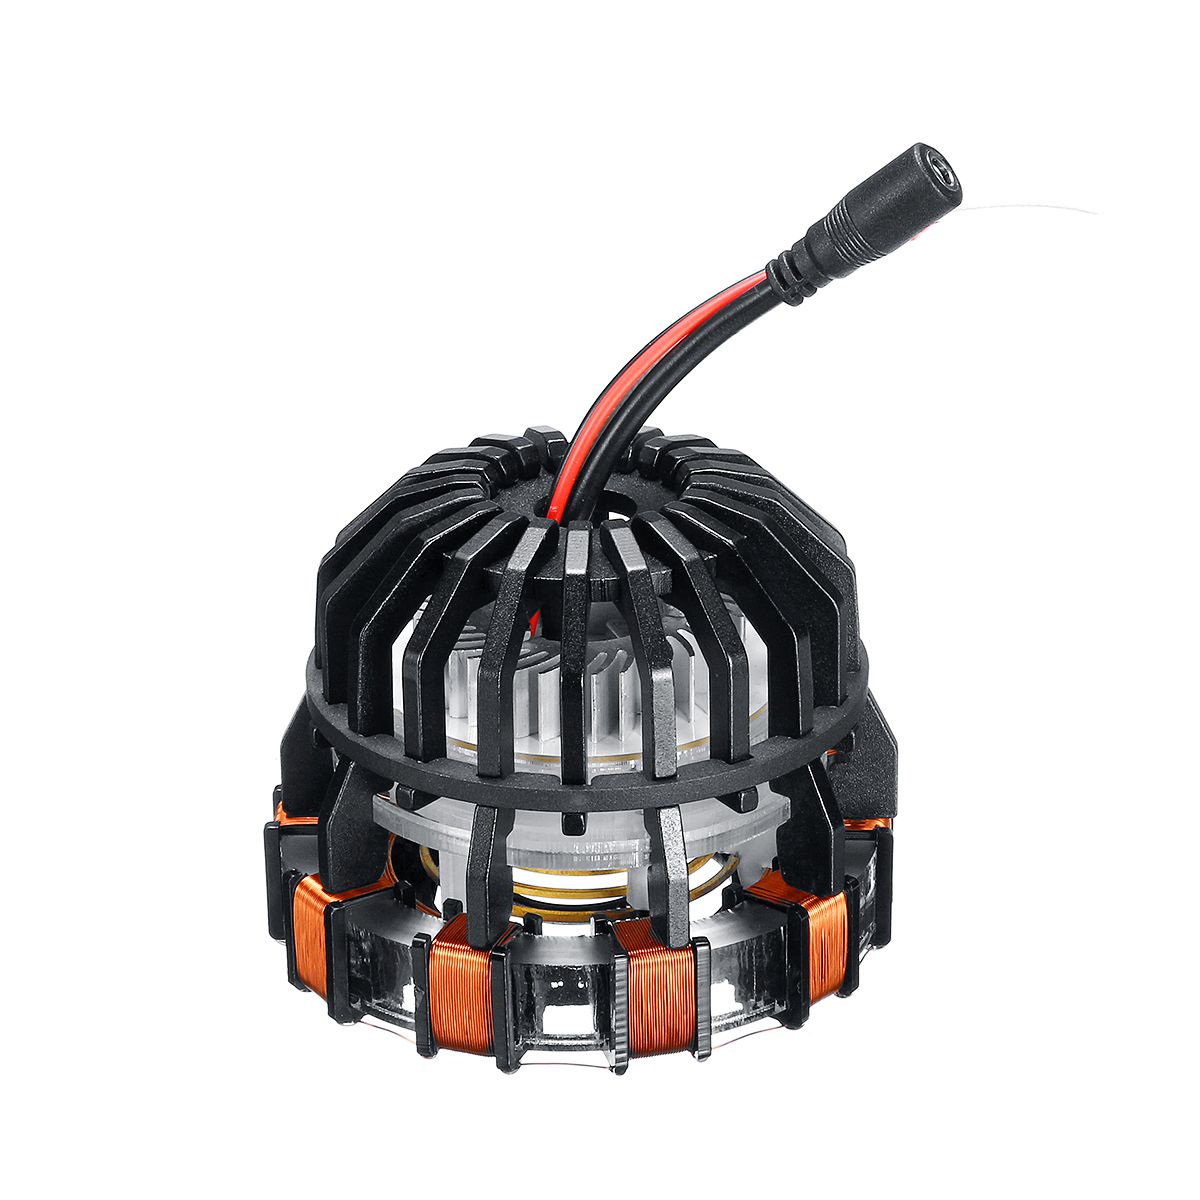 MK1-Aluminum-Alloy-Remote-Ver-Tony-11-Arc-Reactor-DIY-Model-Kit-LED-Chest-Lamp-Remote-Control-Scienc-1477130